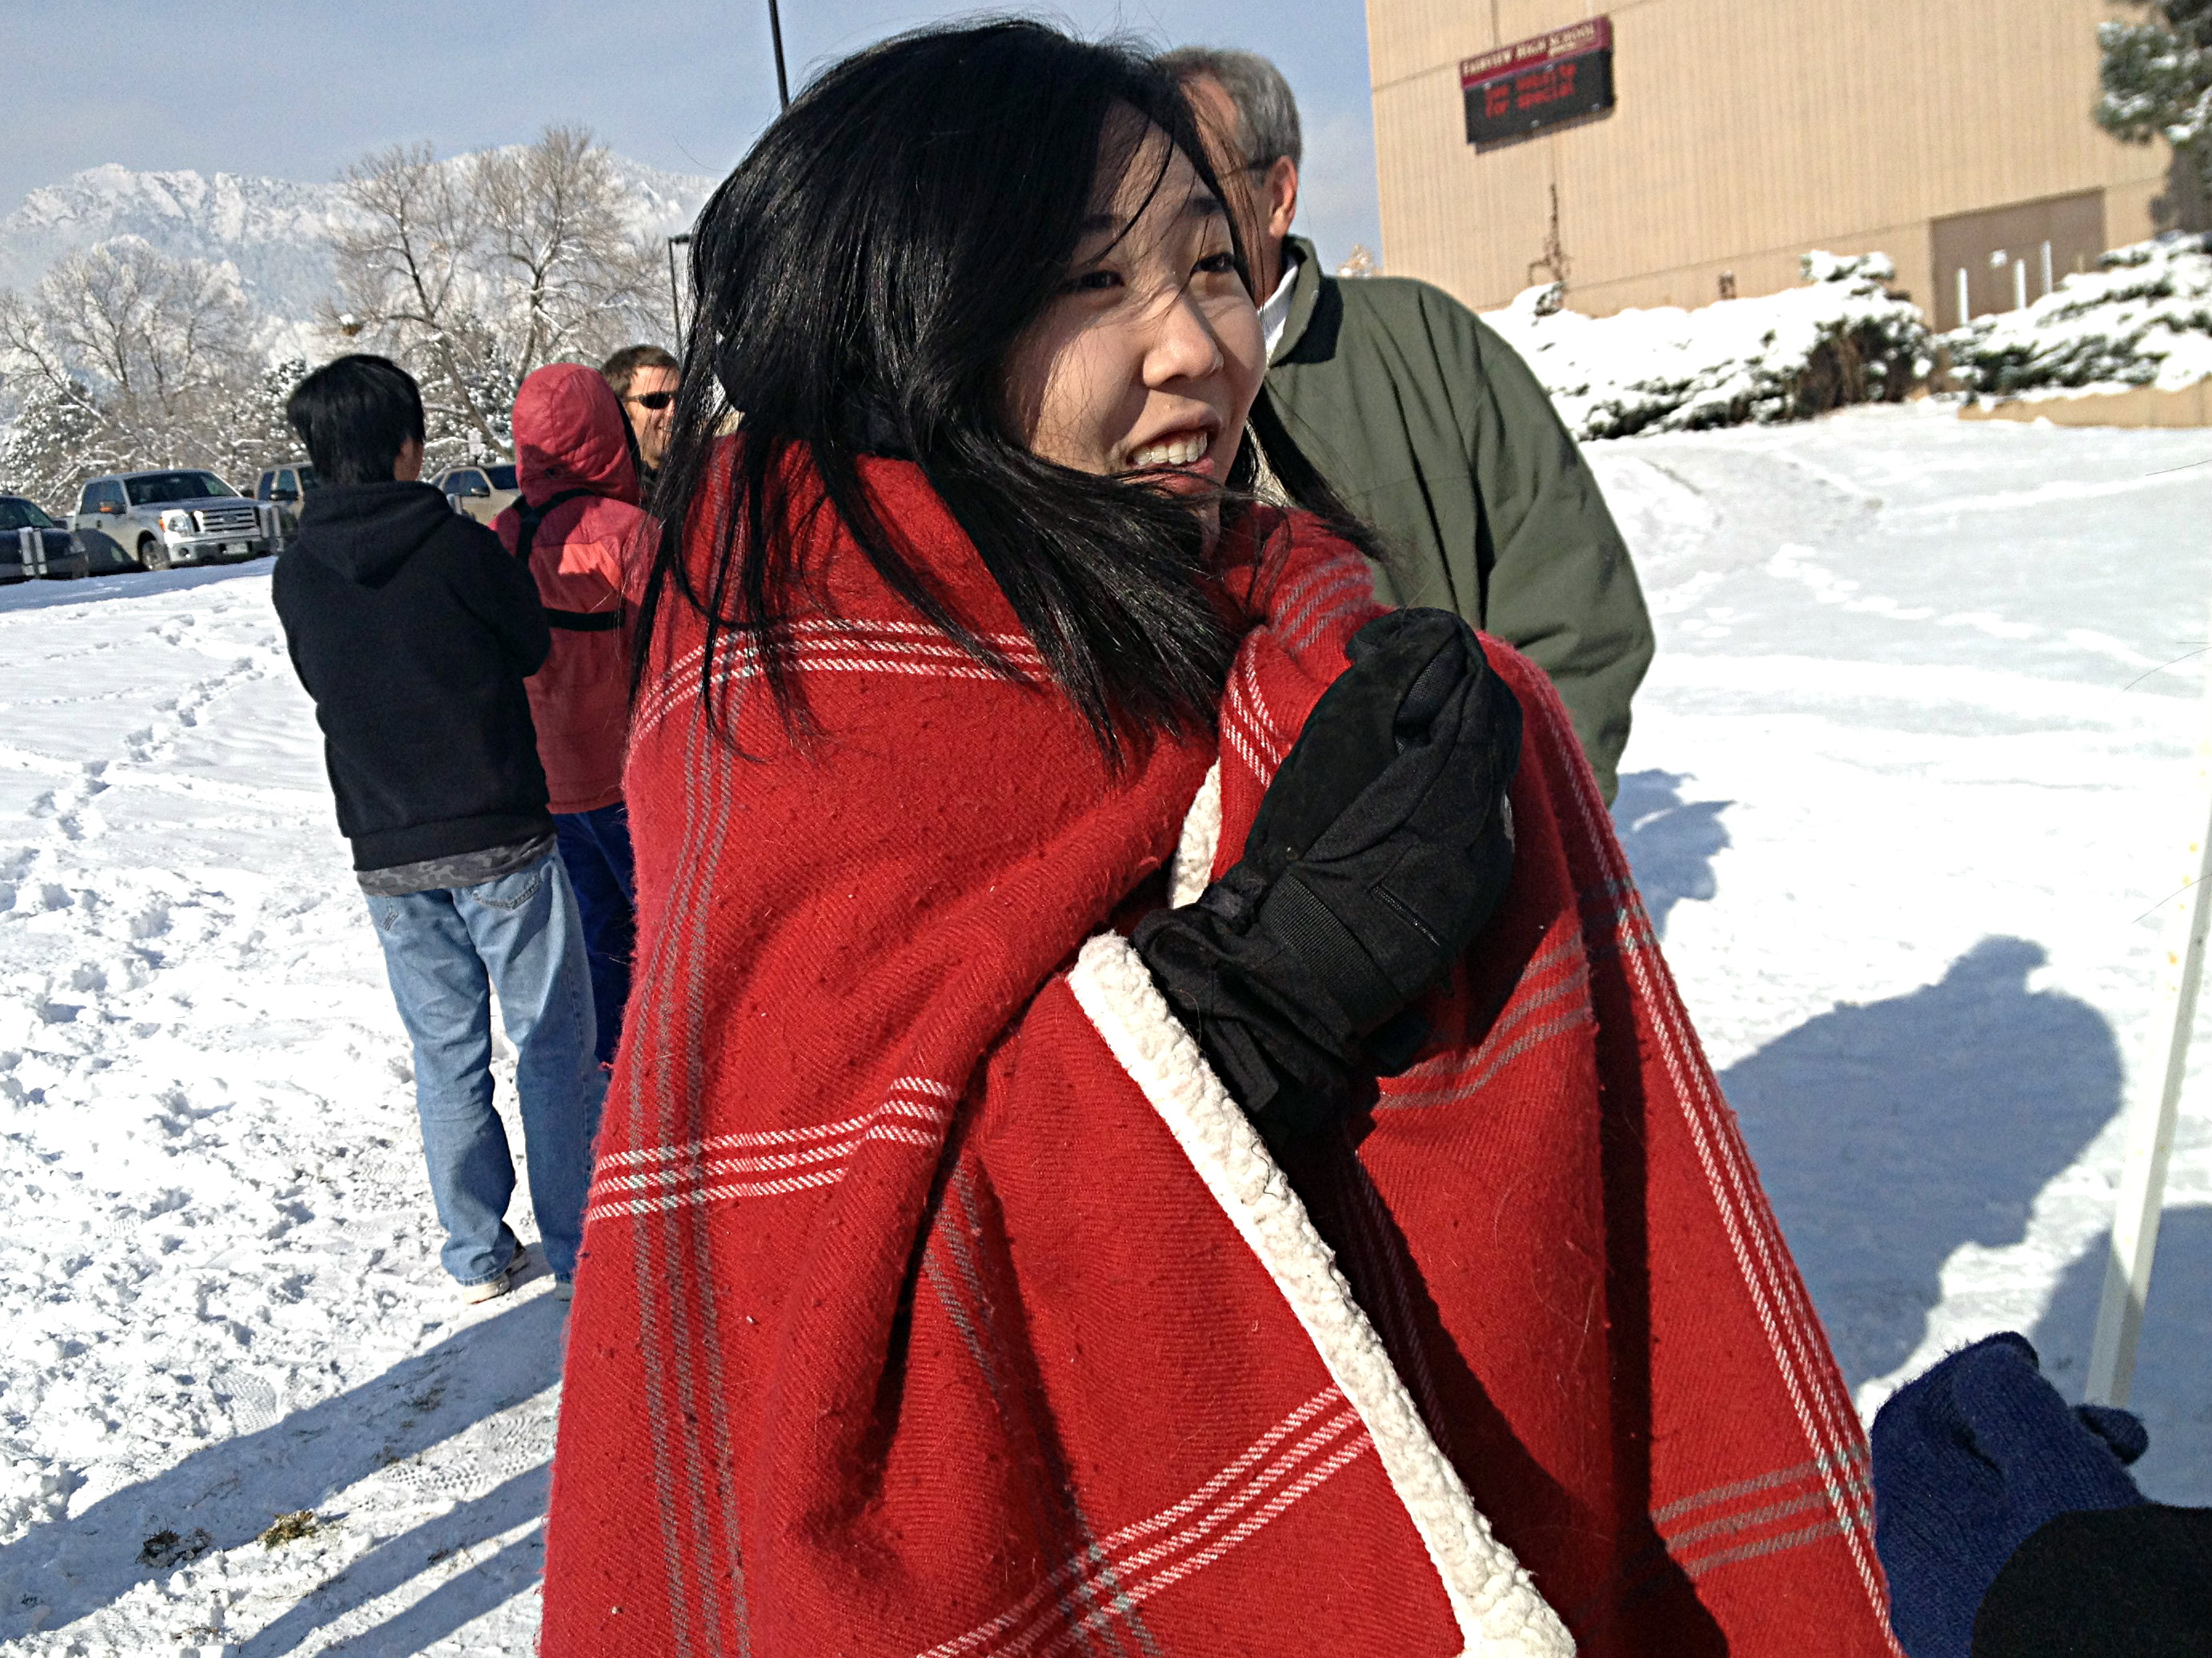 Photo: Boulder protest girl in blanket